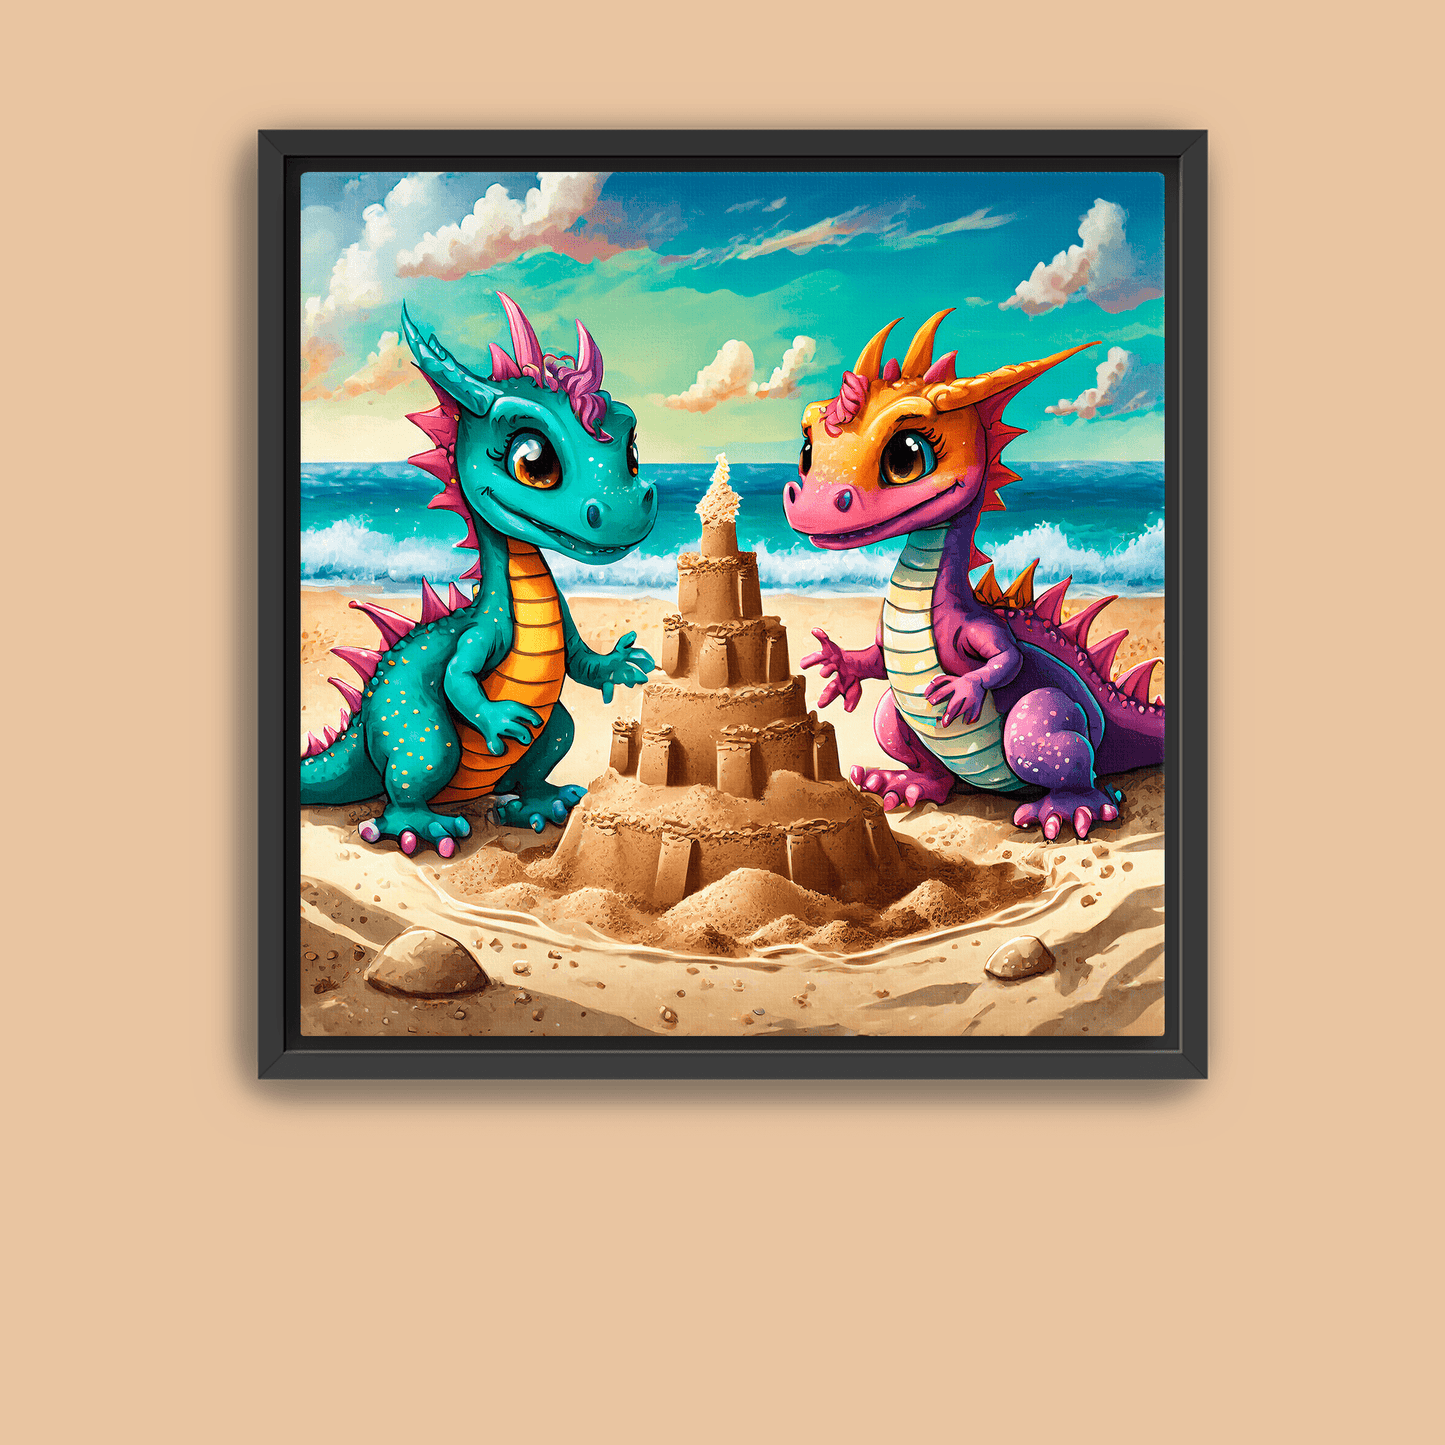 Baby Dragons at the Beach - Canvas Wrap - Premium Canvas Wrap